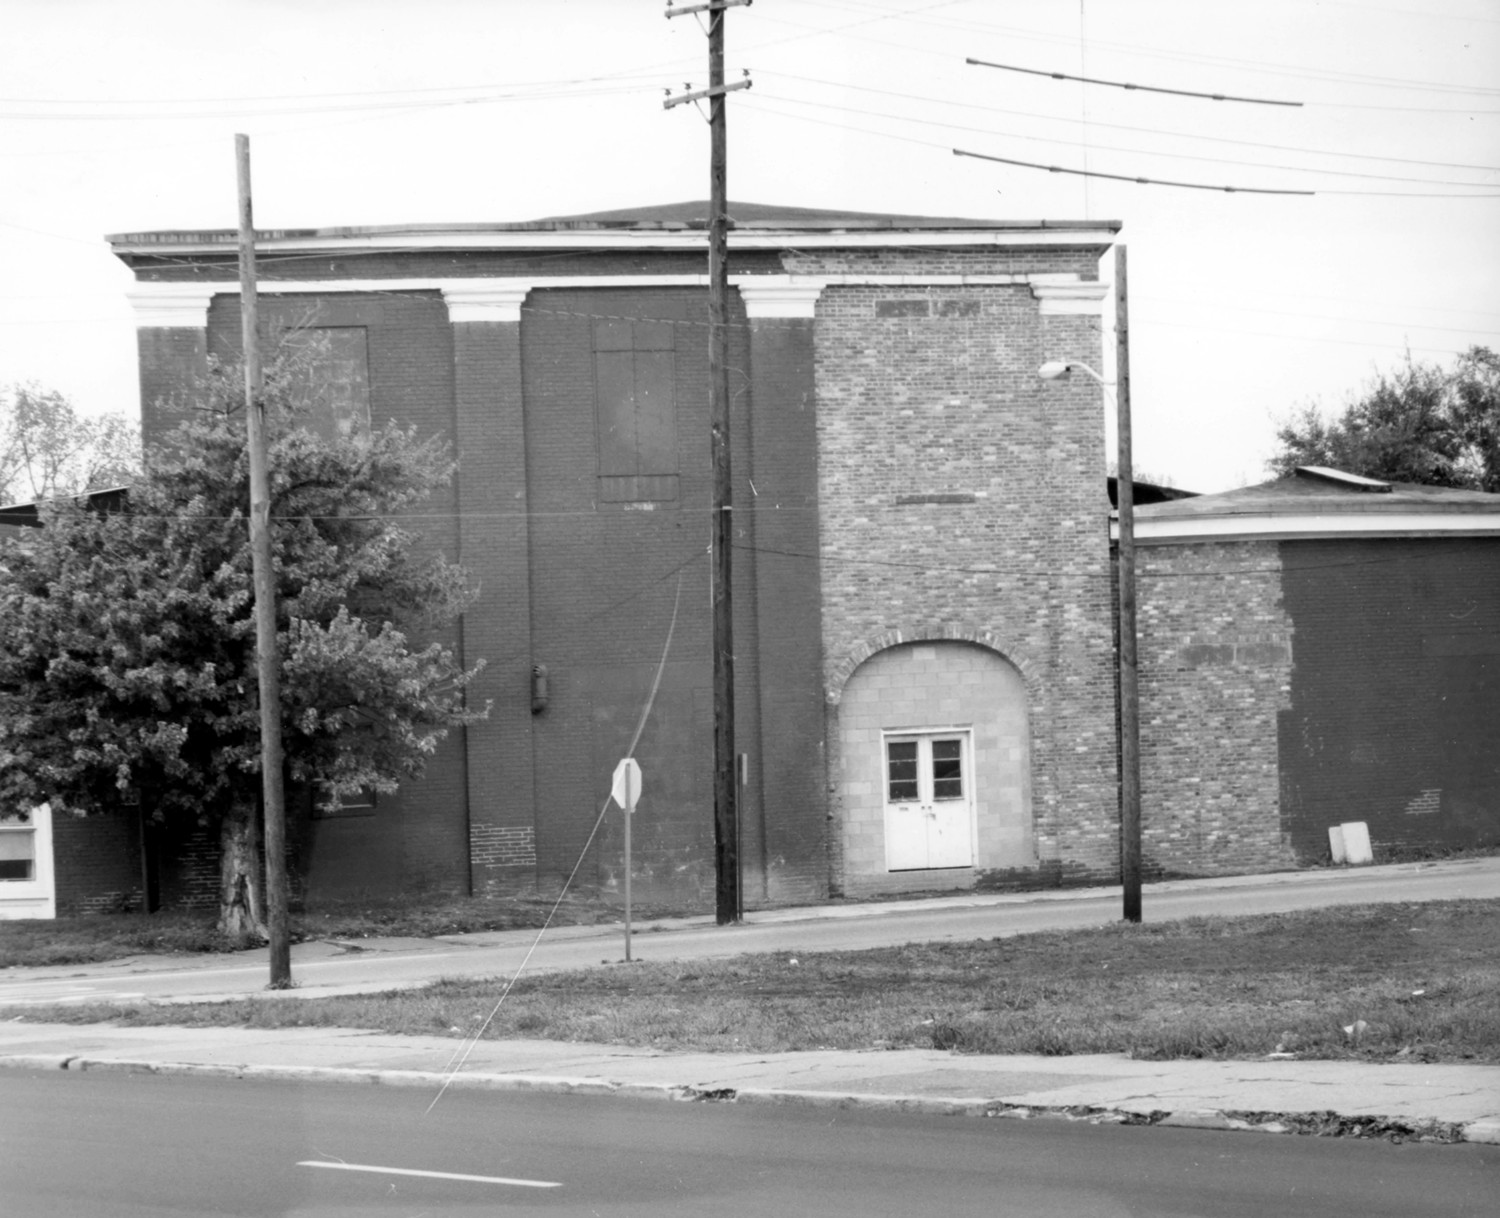 New Albany and Salem Railroad Depot, New Albany Indiana  (1983)